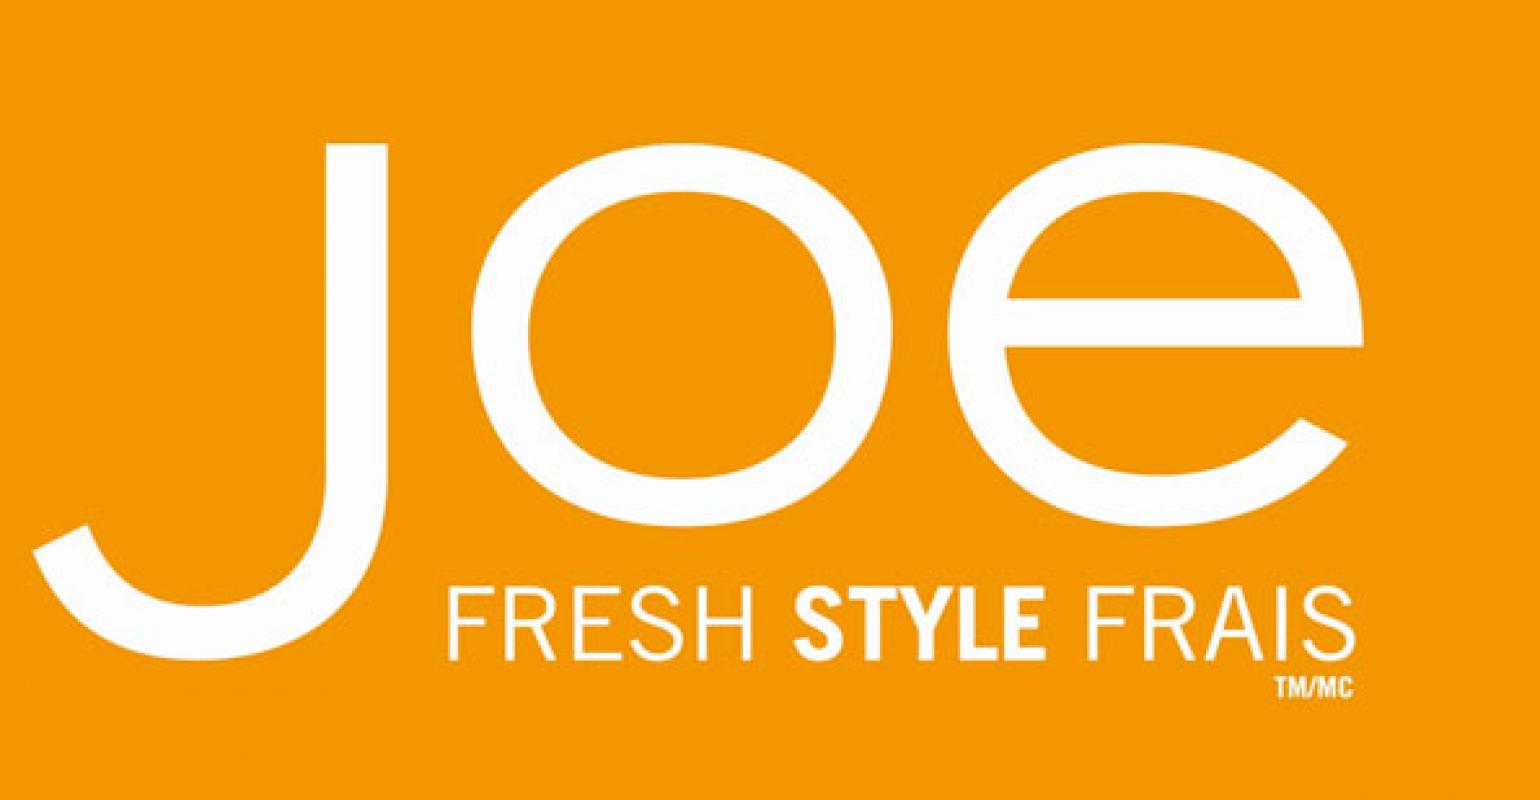 Loblaw Expands Joe Fresh in U.S.